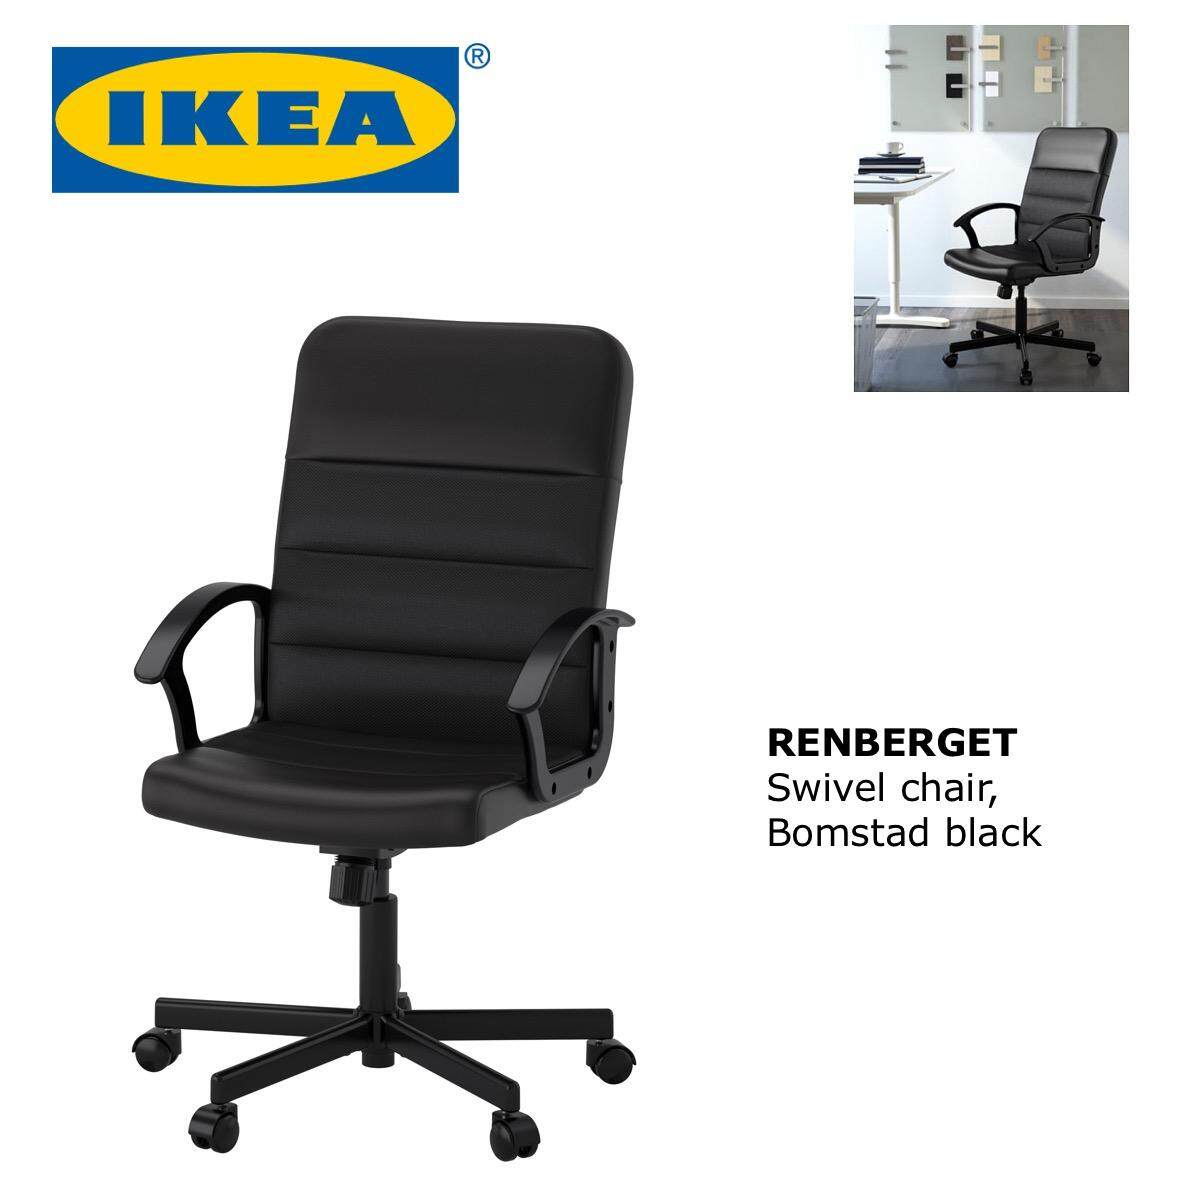 Ikea Renberget Office Home Castor Lightweight Swivel Chair Bomstad Black Lazada